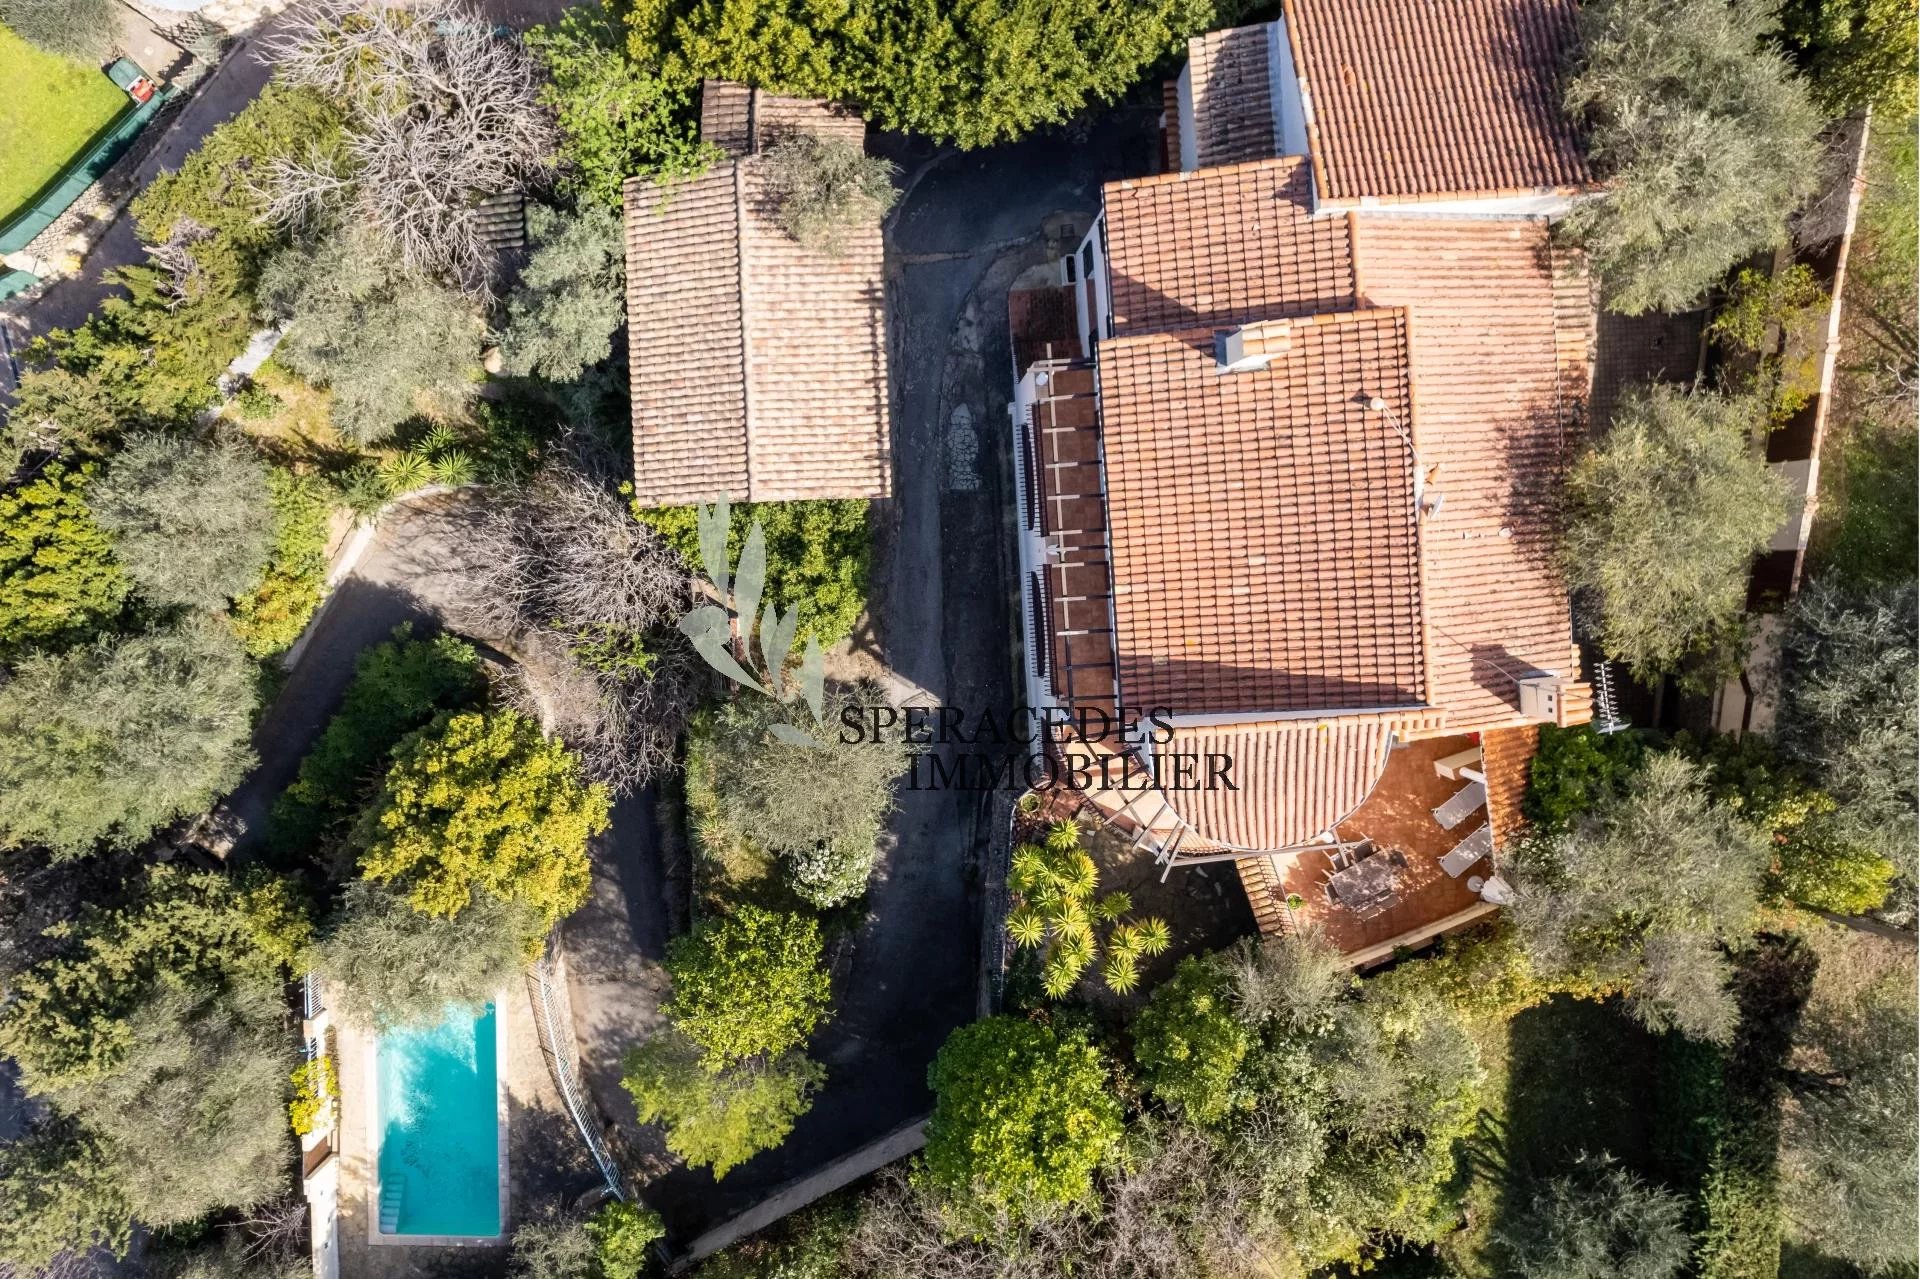 Grasse - Architect's villa with pool